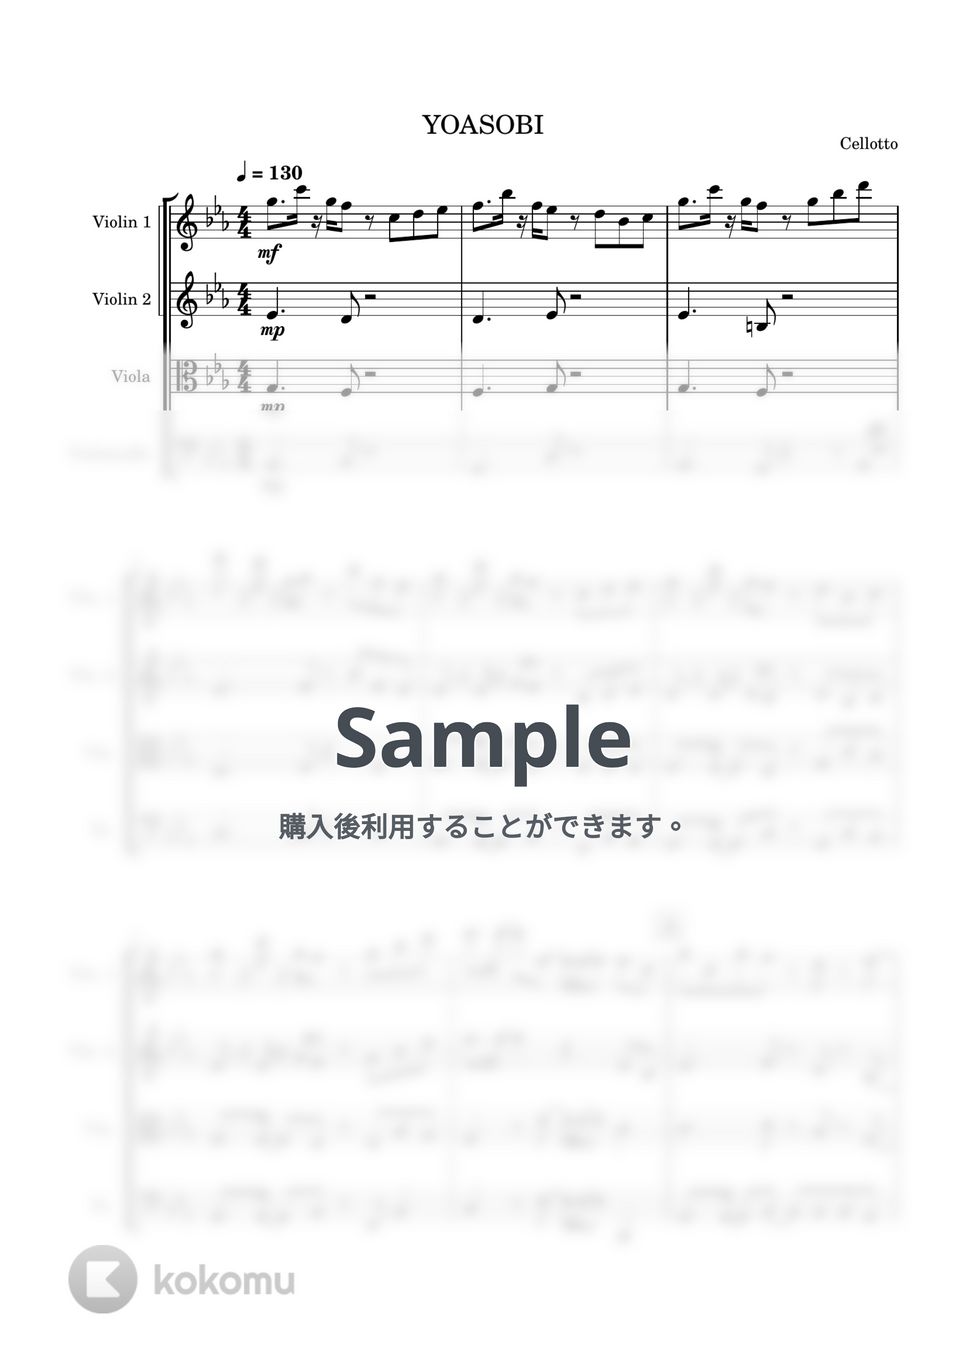 YOASOBI - ハルジオン (弦楽四重奏) by Cellotto